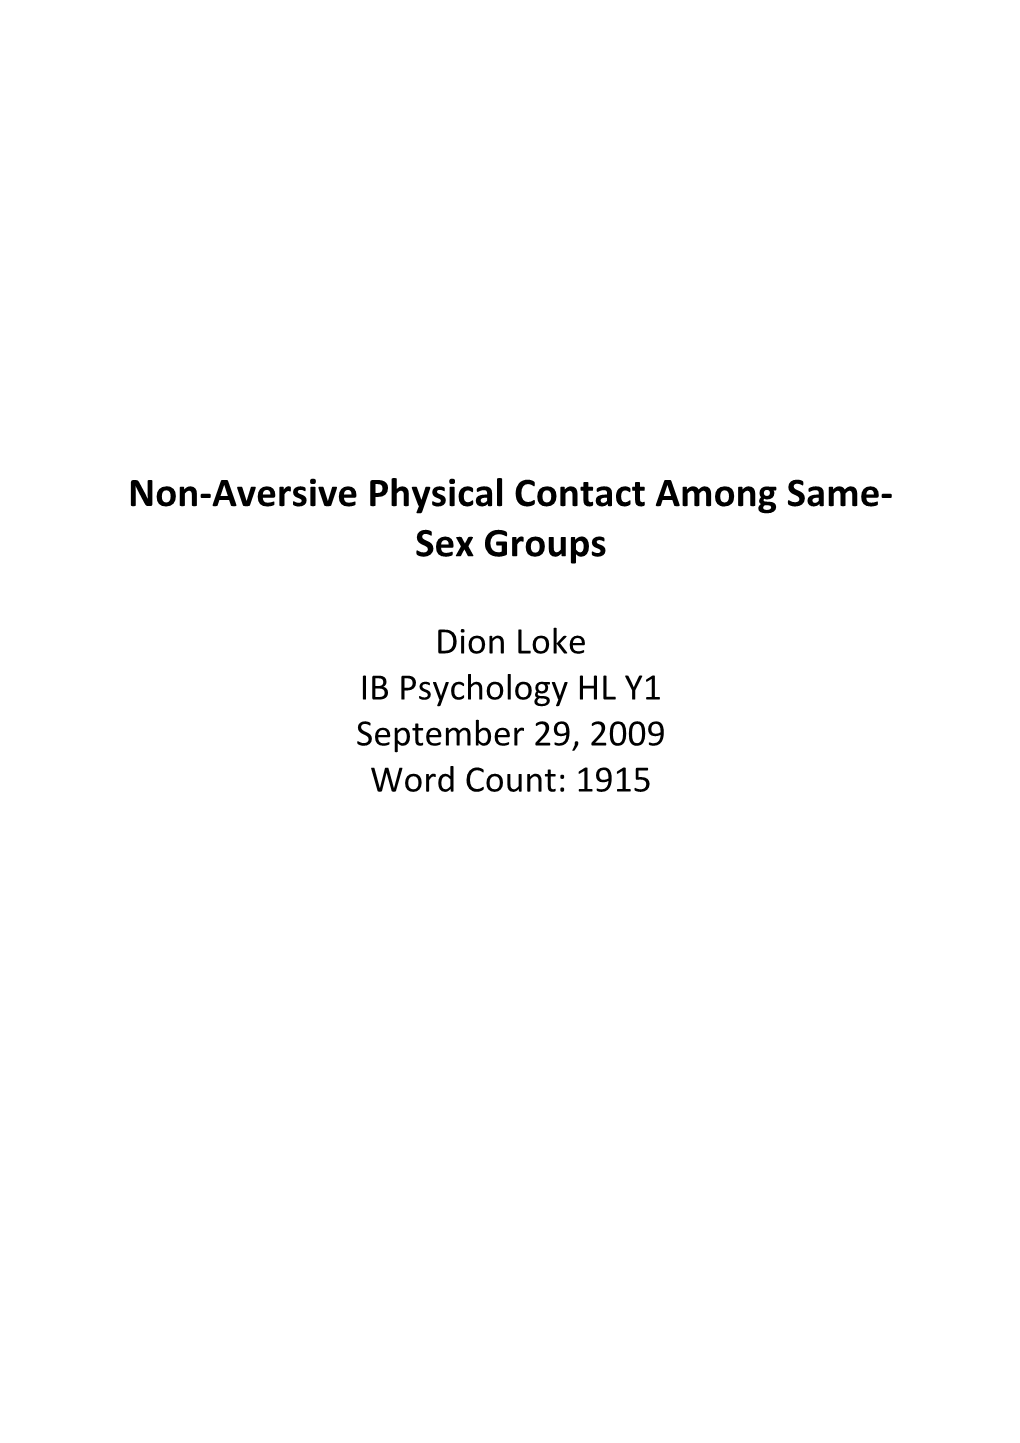 Non-Aversive Physical Contact Among Same-Sex Groups